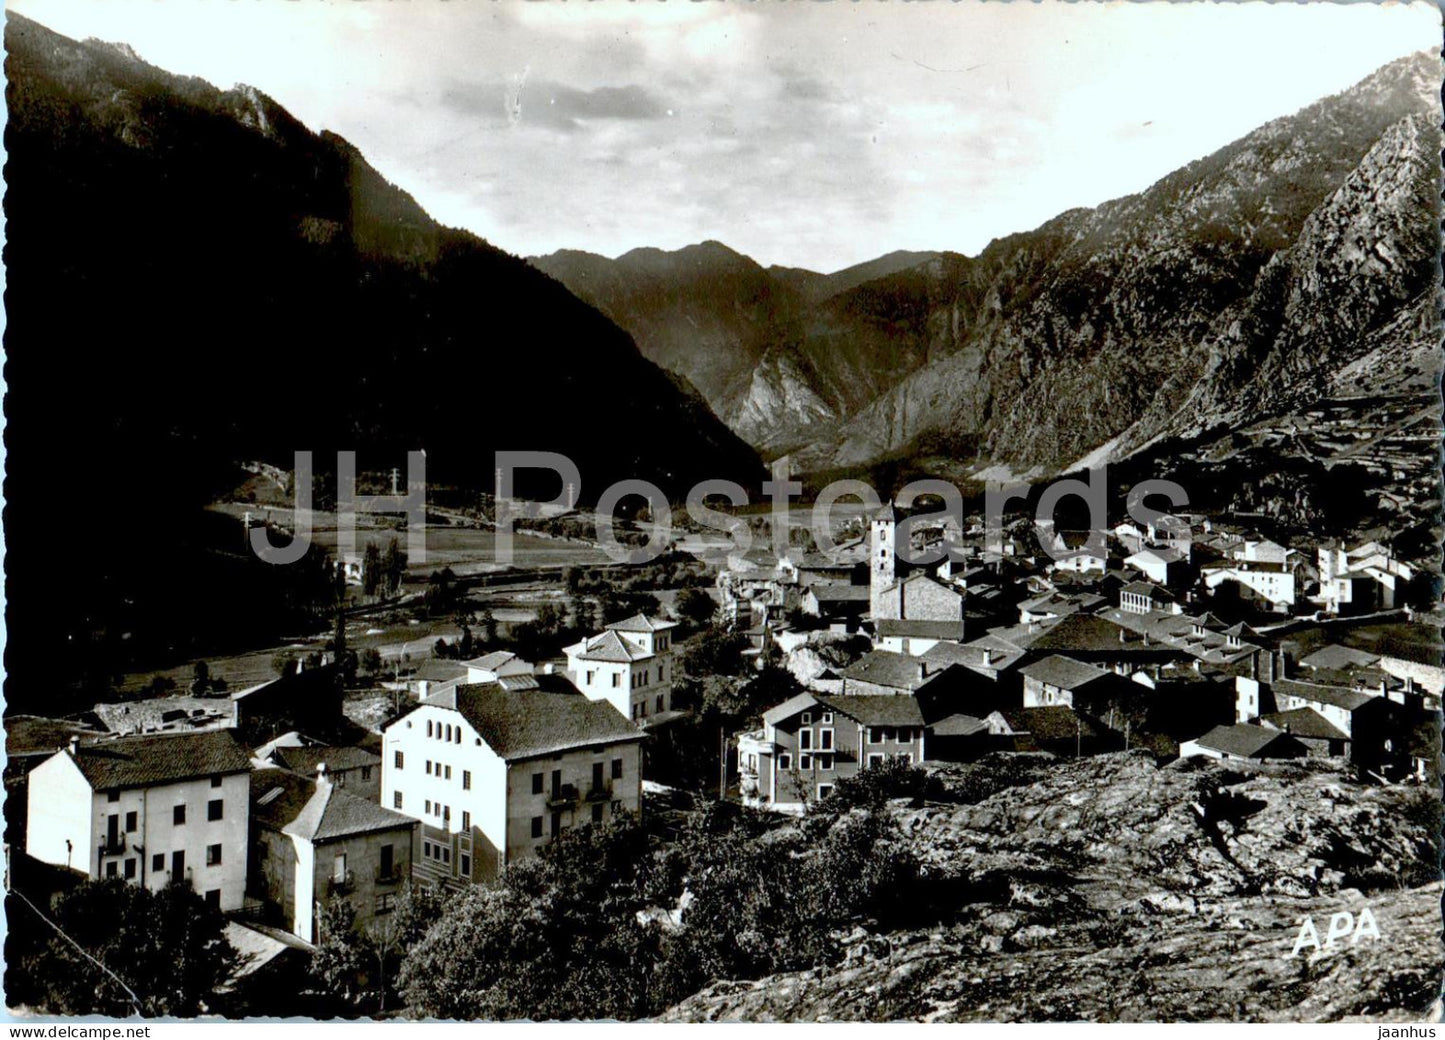 Valls D'Andorra - Vue Genrale - Andorre la Vieille Capitale des Vallees - 35 - old postcard - 1957 - Andorra - used - JH Postcards